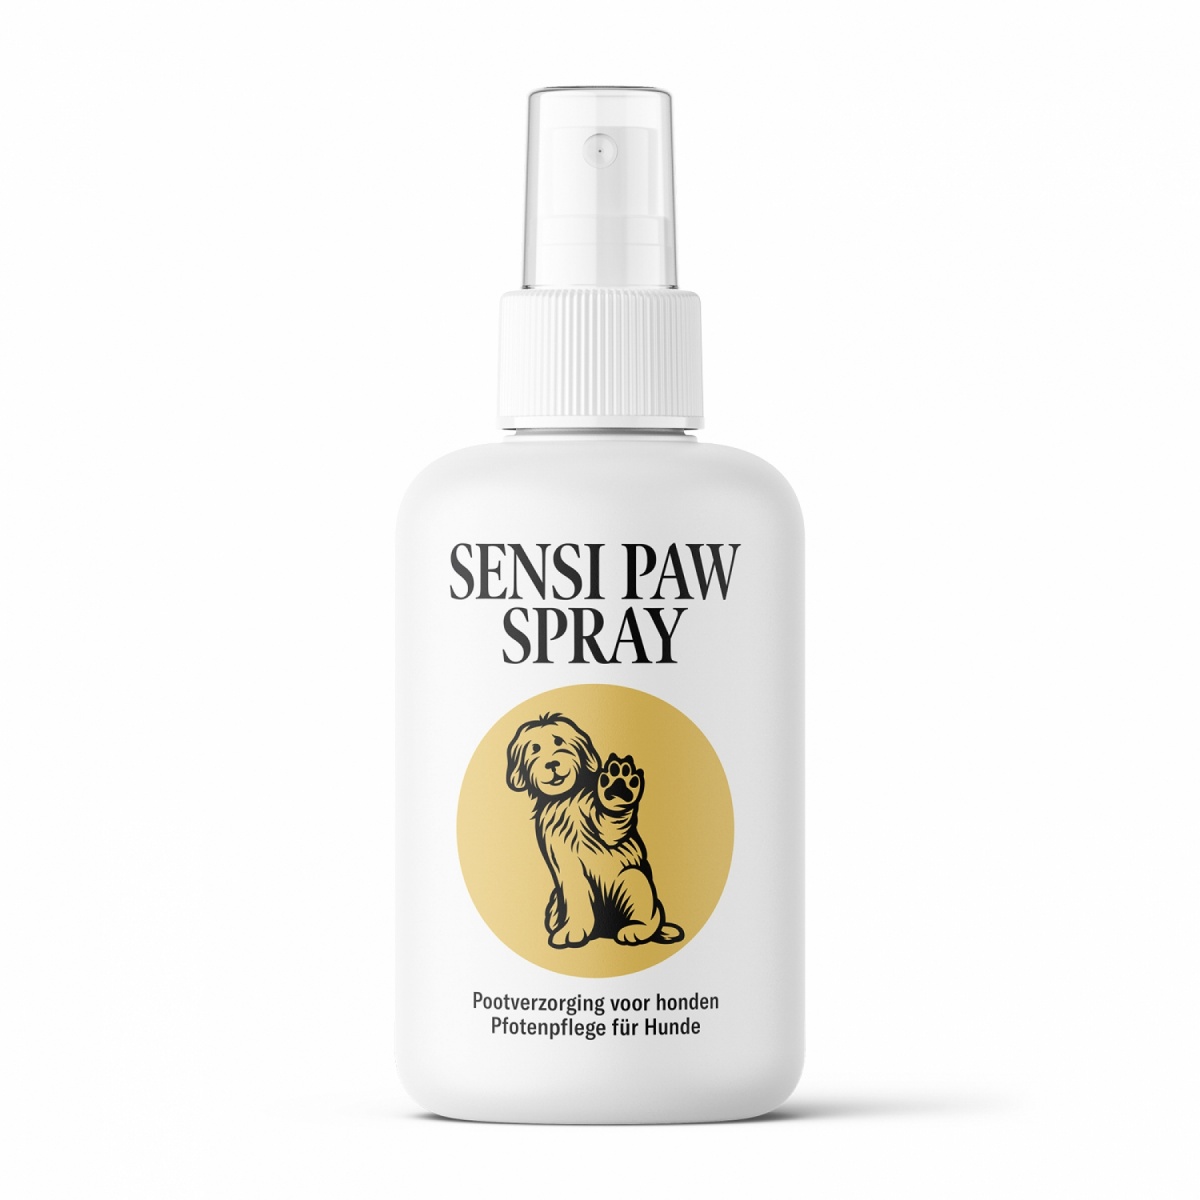 Sensi Paw Spray - Hunde 100 ml.